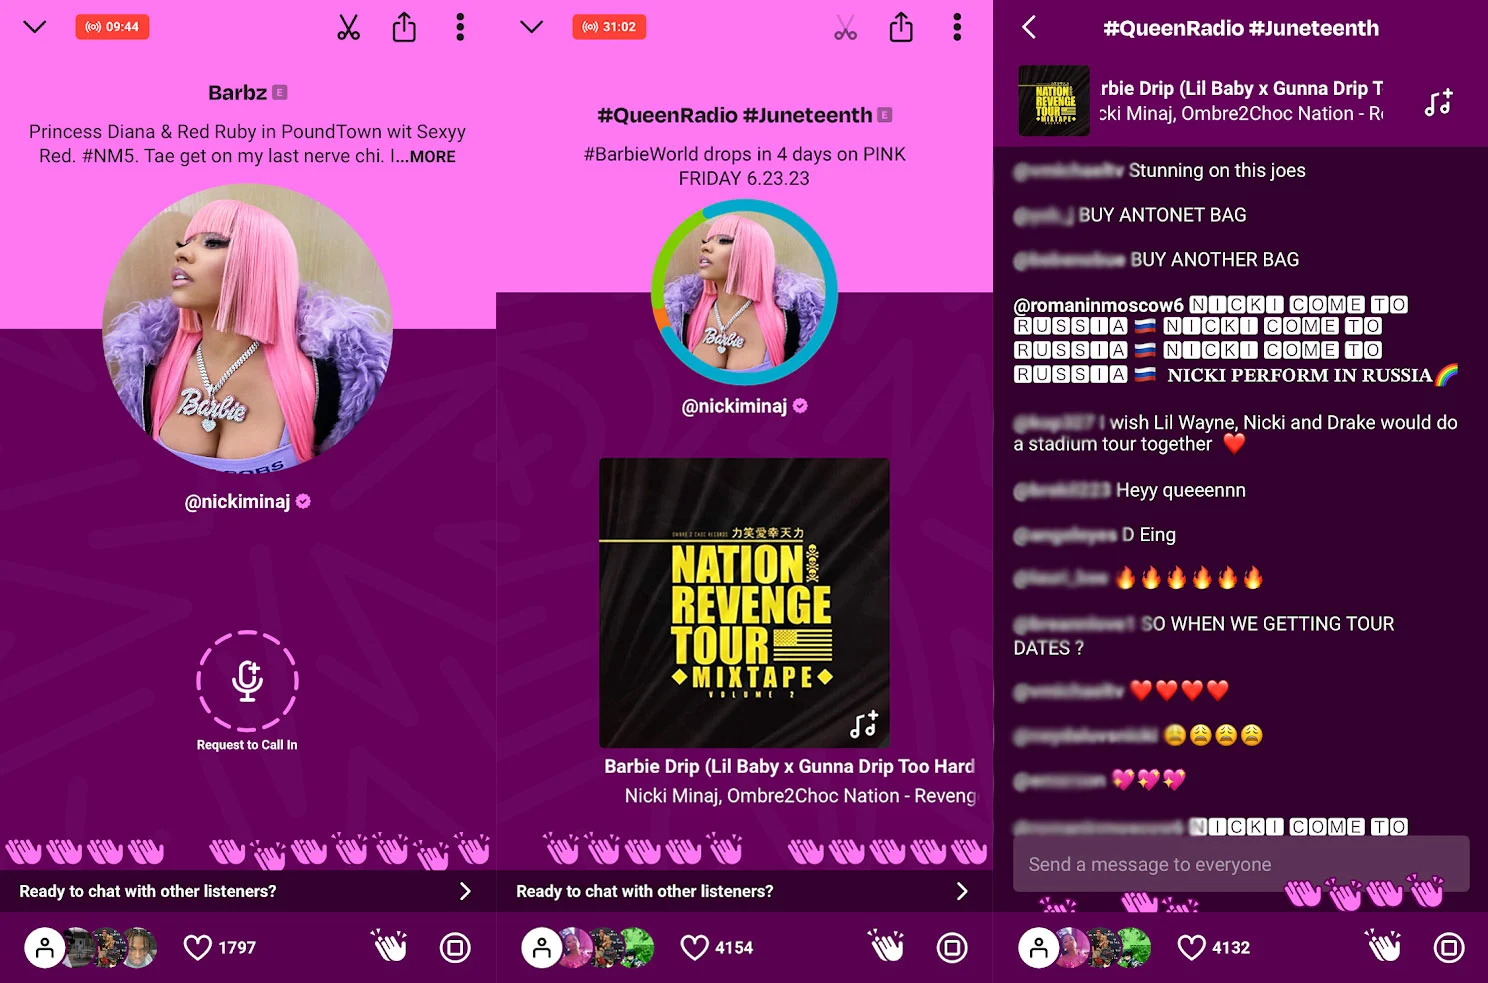 Three screenshots together showing different elements of Nicki Minaj's radio show on Amp.